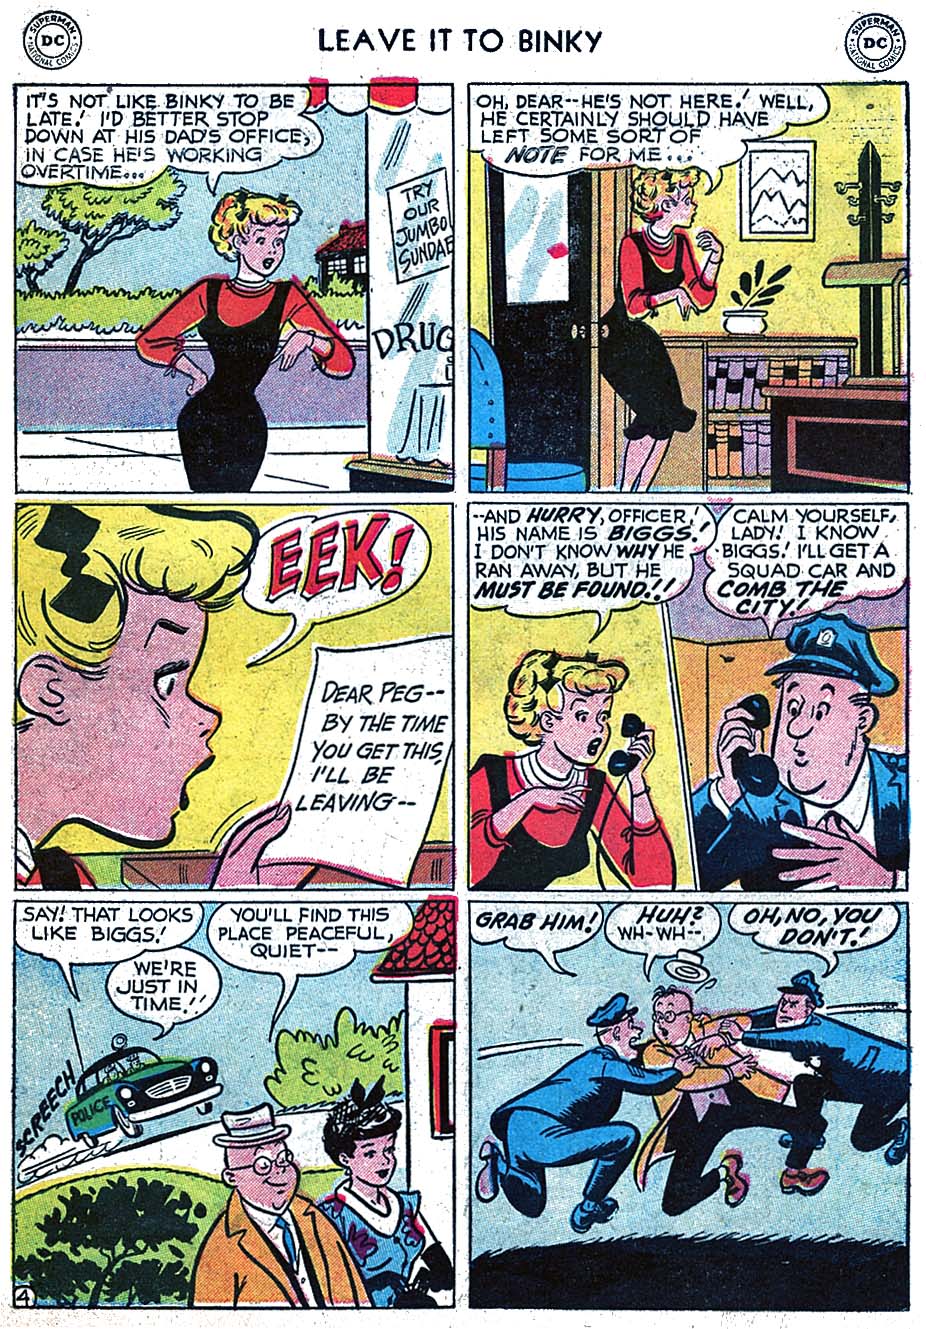 Read online Leave it to Binky comic -  Issue #51 - 31